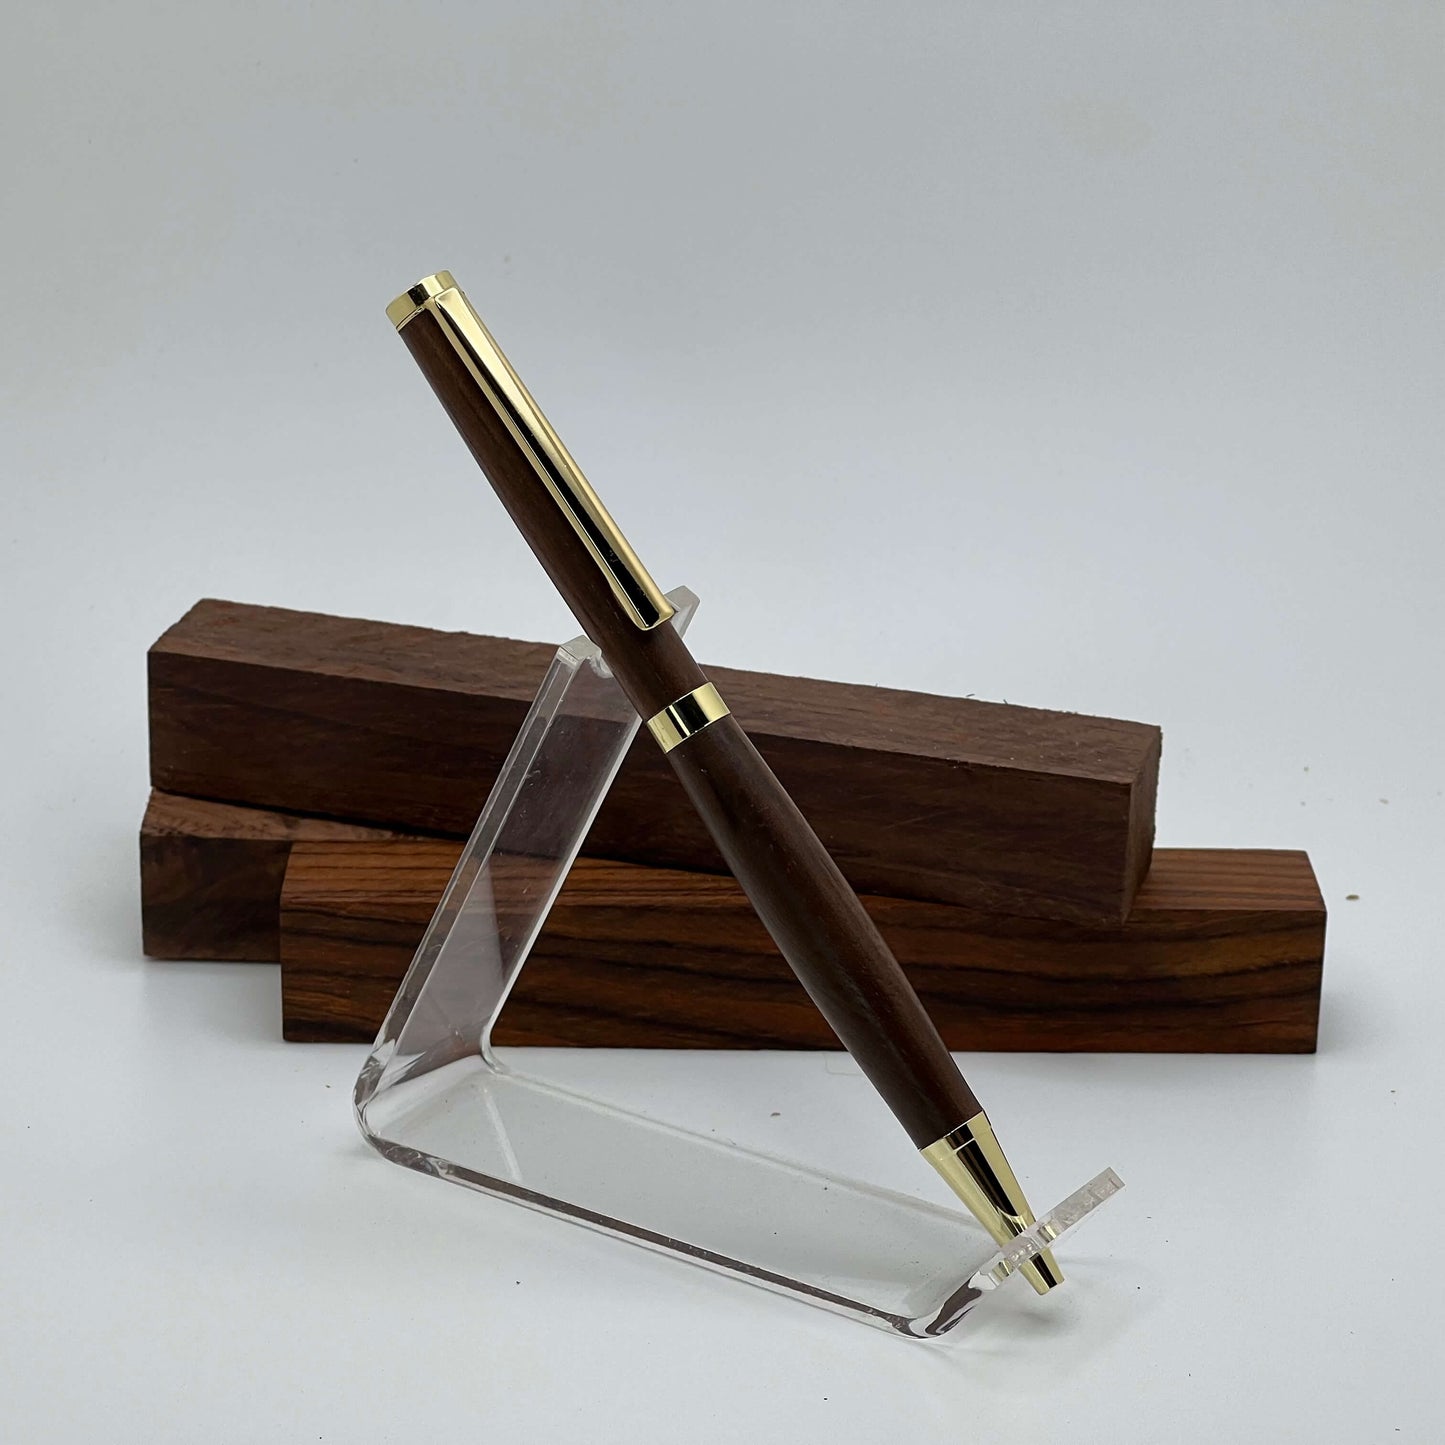 24kt gold clad slimline pen with walnut wood display